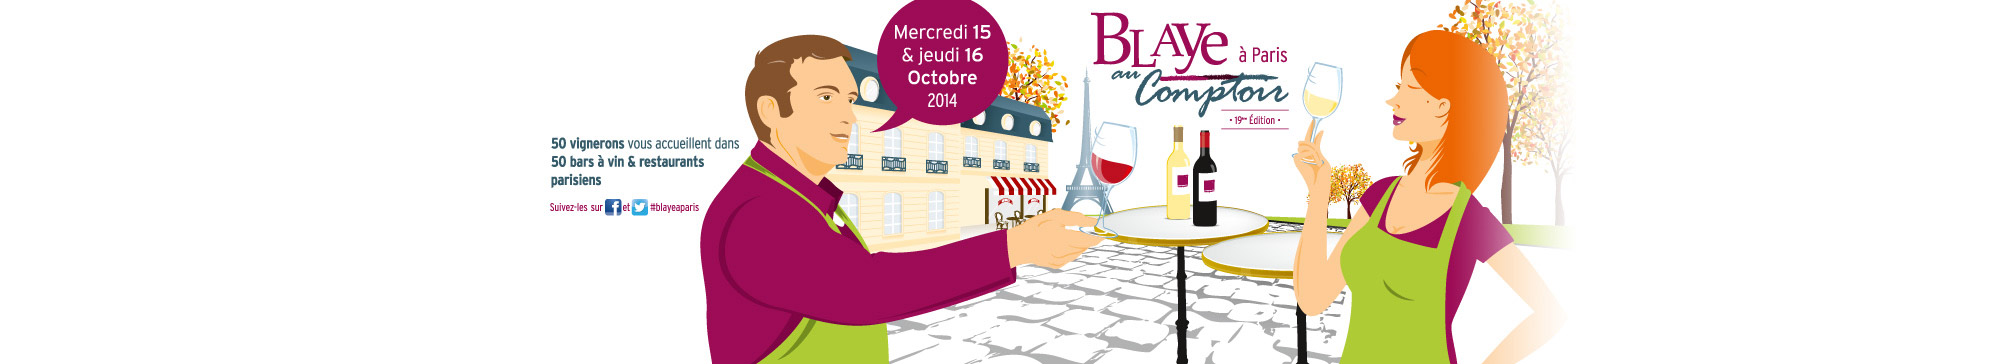 Blaye au Comptoir Paris 2014 - les dates